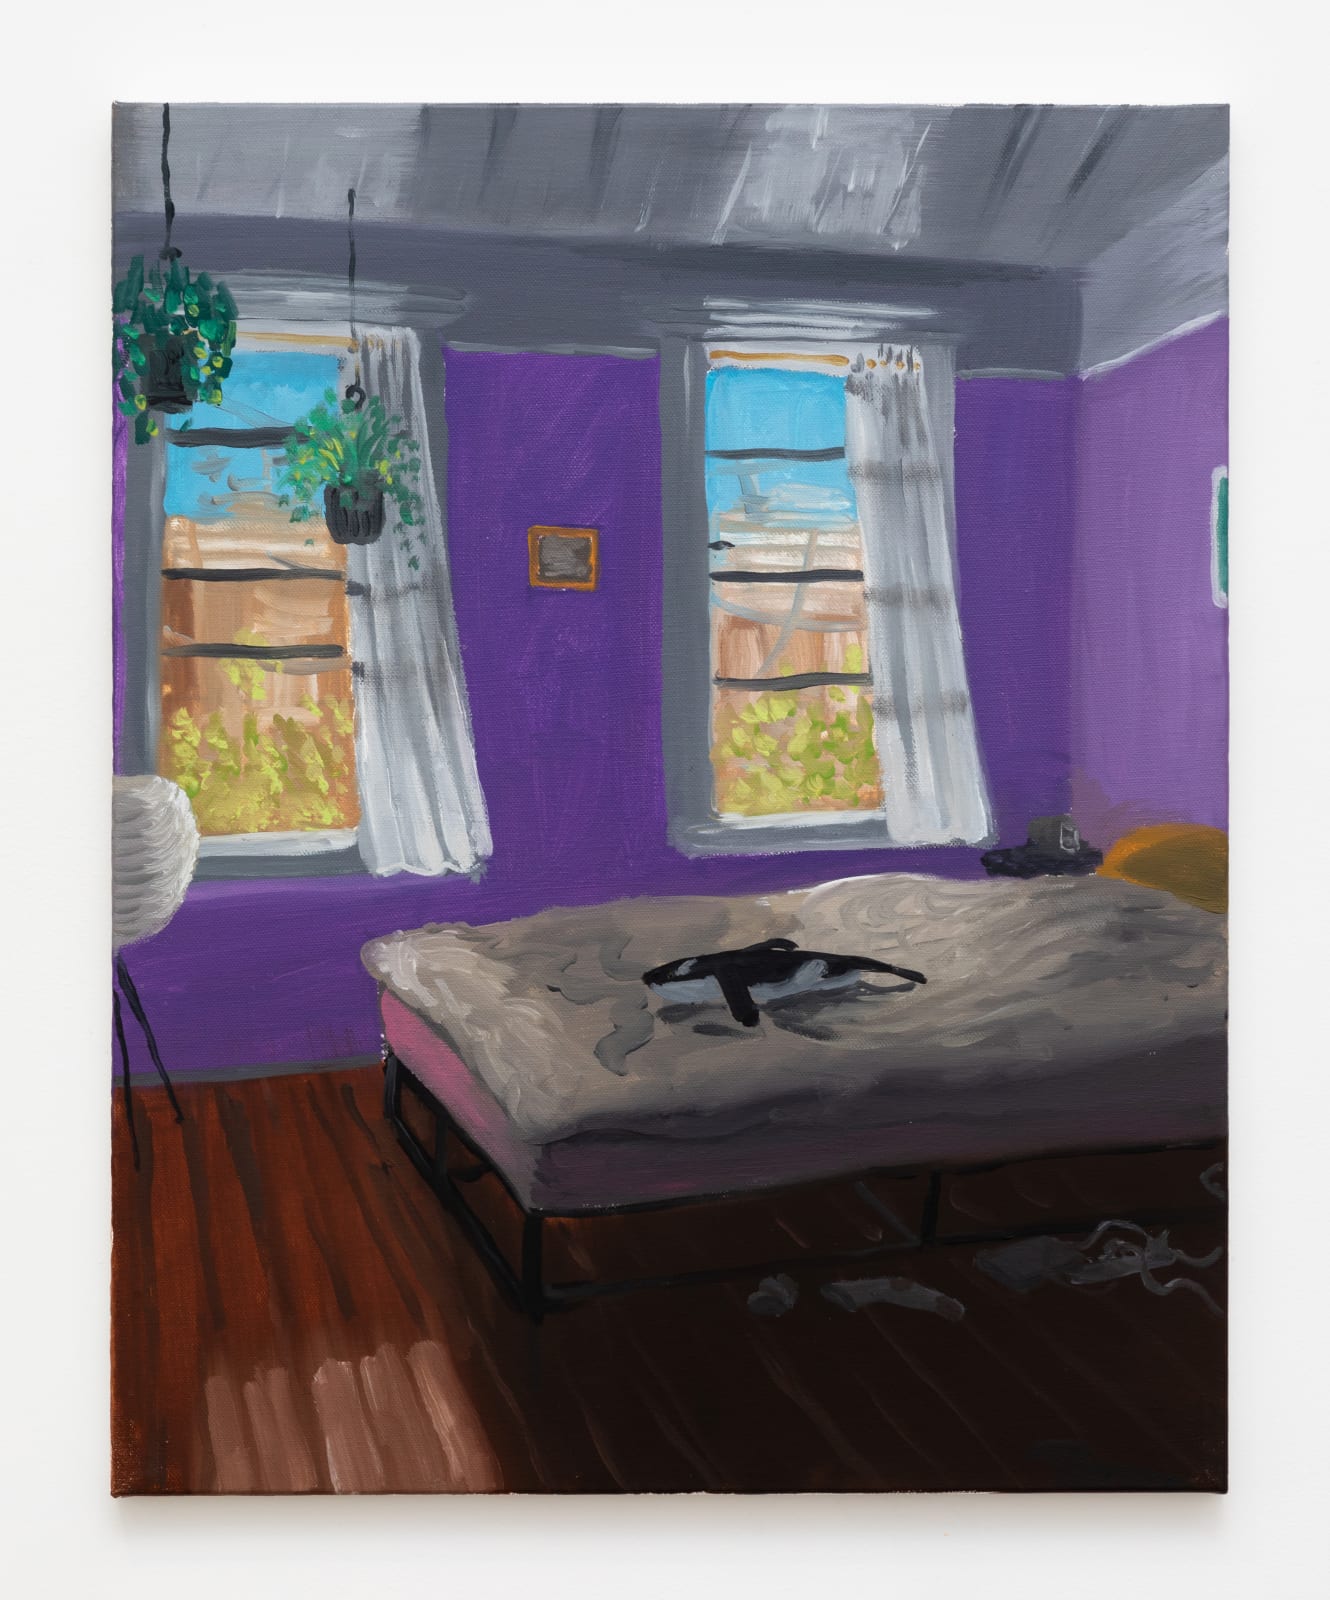 Clark Filio, Menahan Bedroom, 2019